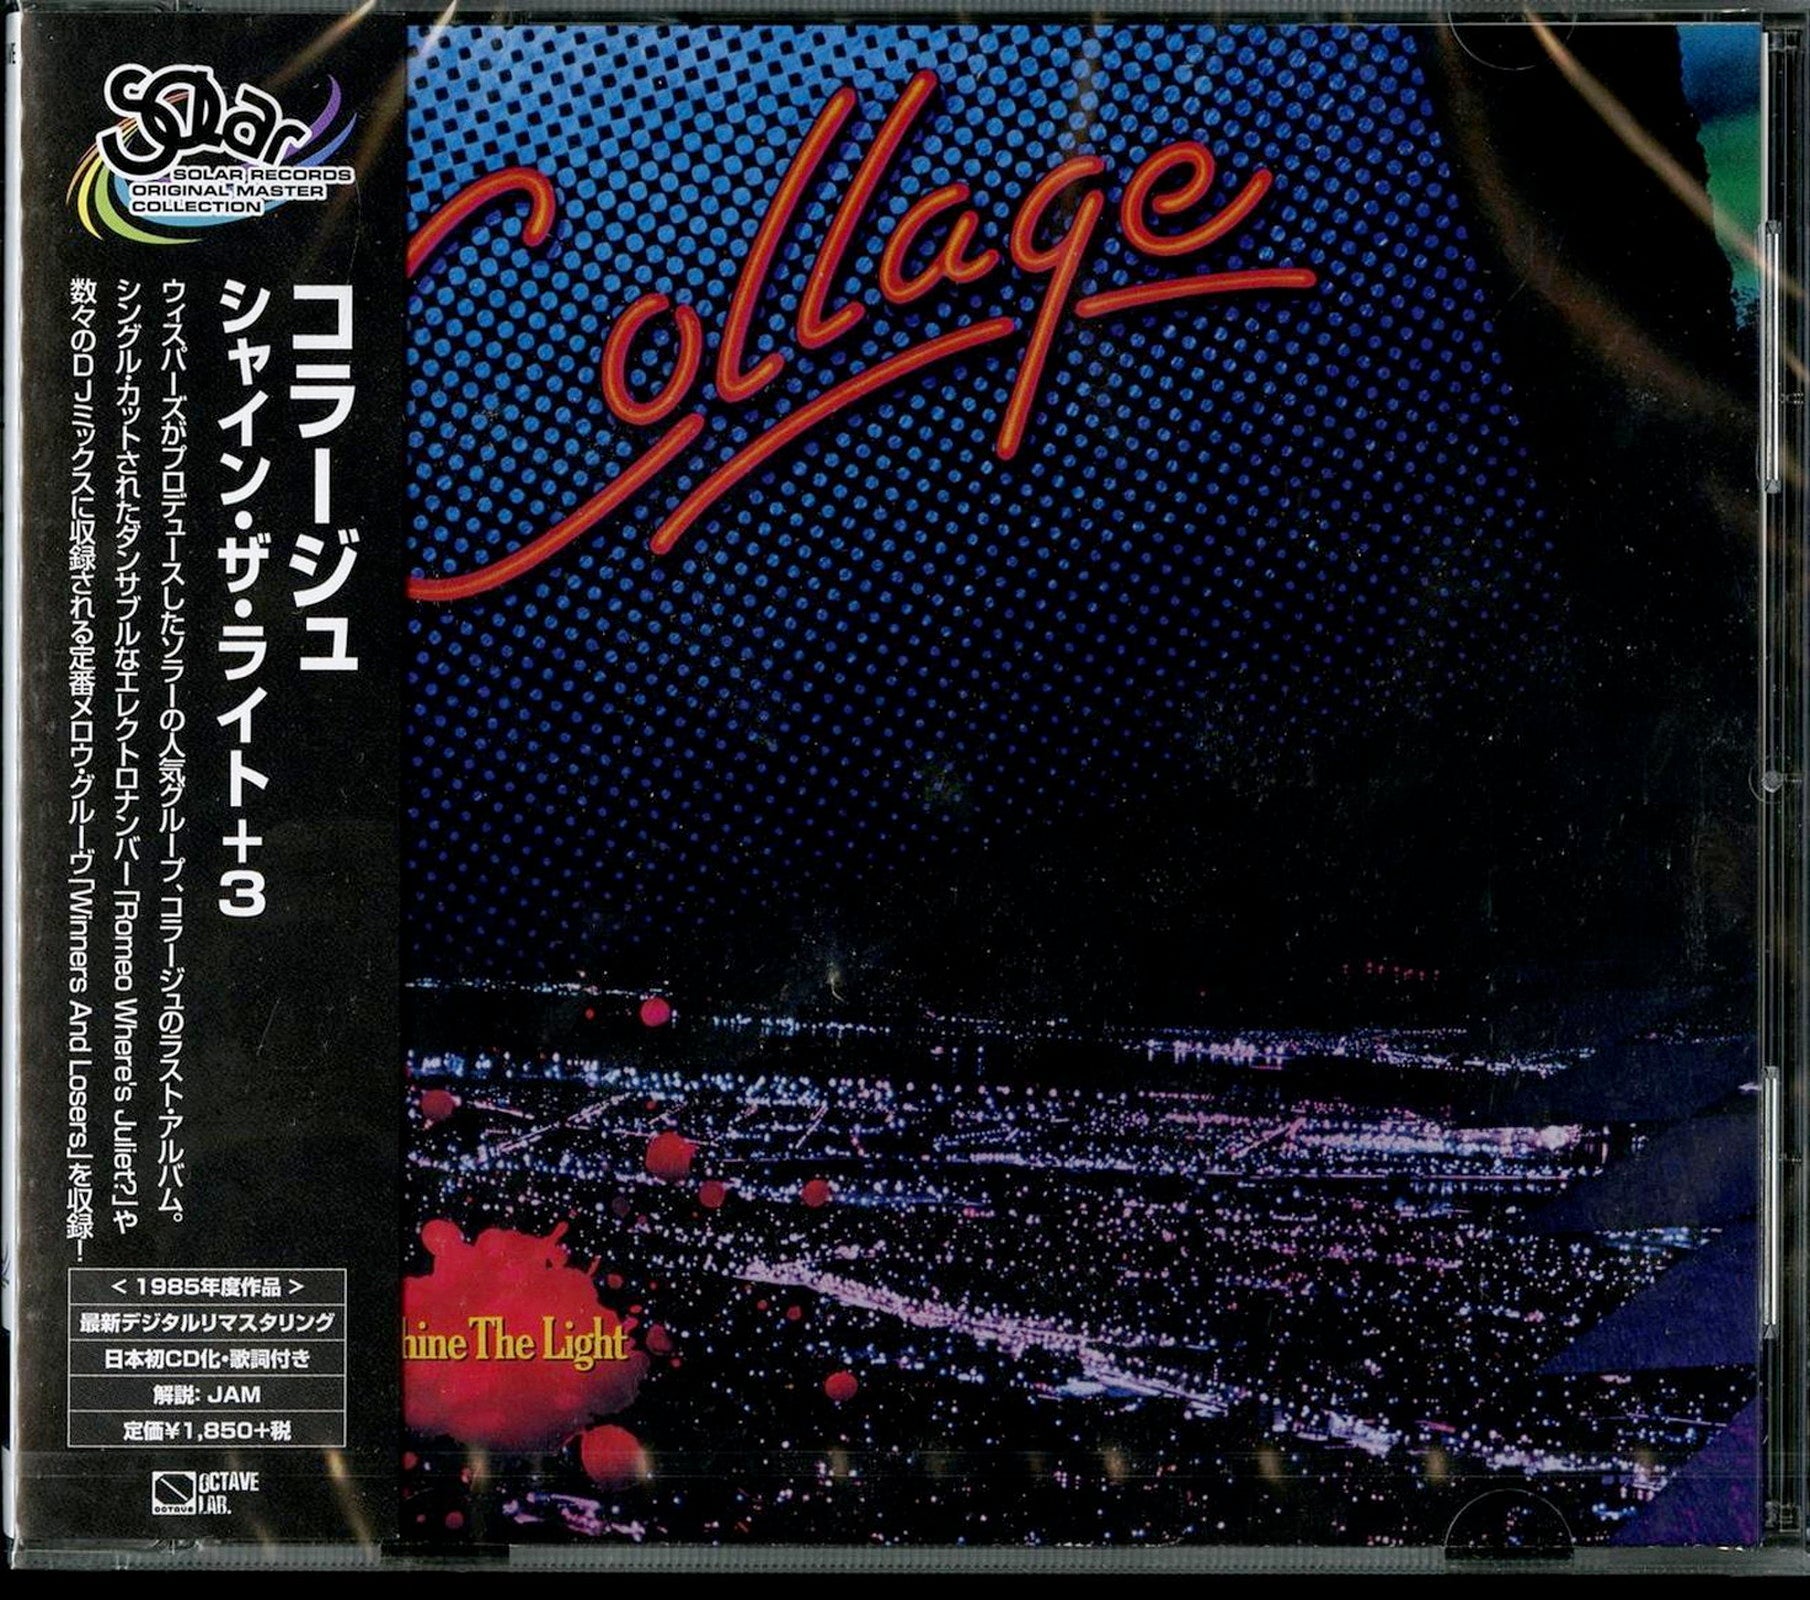 Collage - Shine The Light+3 - Japan CD Bonus Track Limited Edition